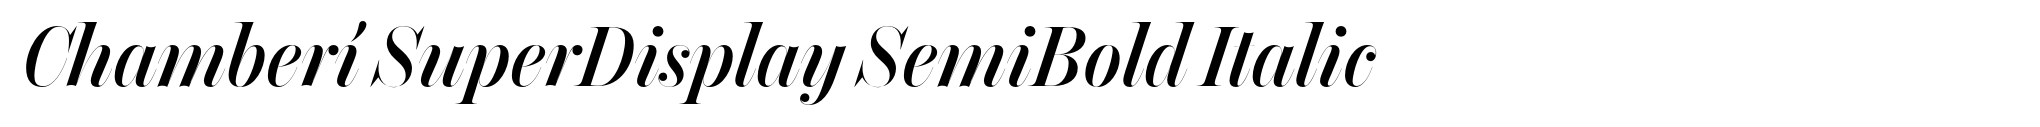 Chamberí SuperDisplay SemiBold Italic image